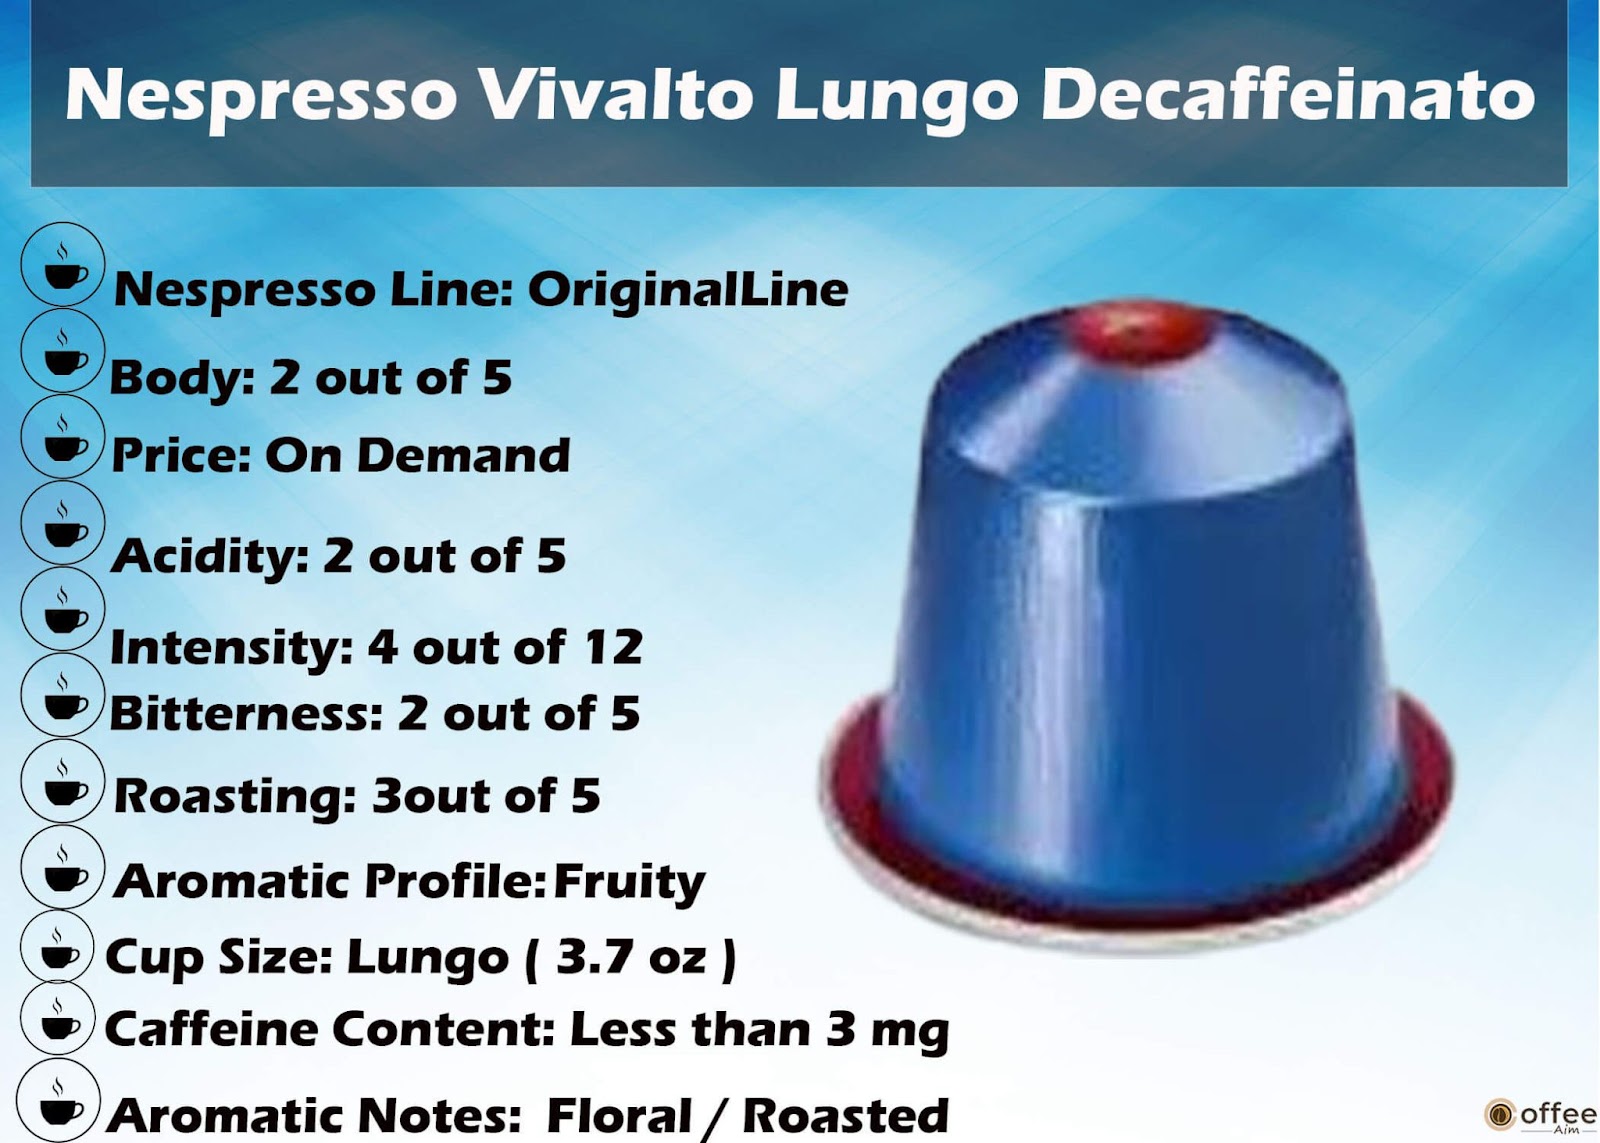 Features Chart of Nespresso Decaffeinato Vivalto Lungo Original Line Capsule.